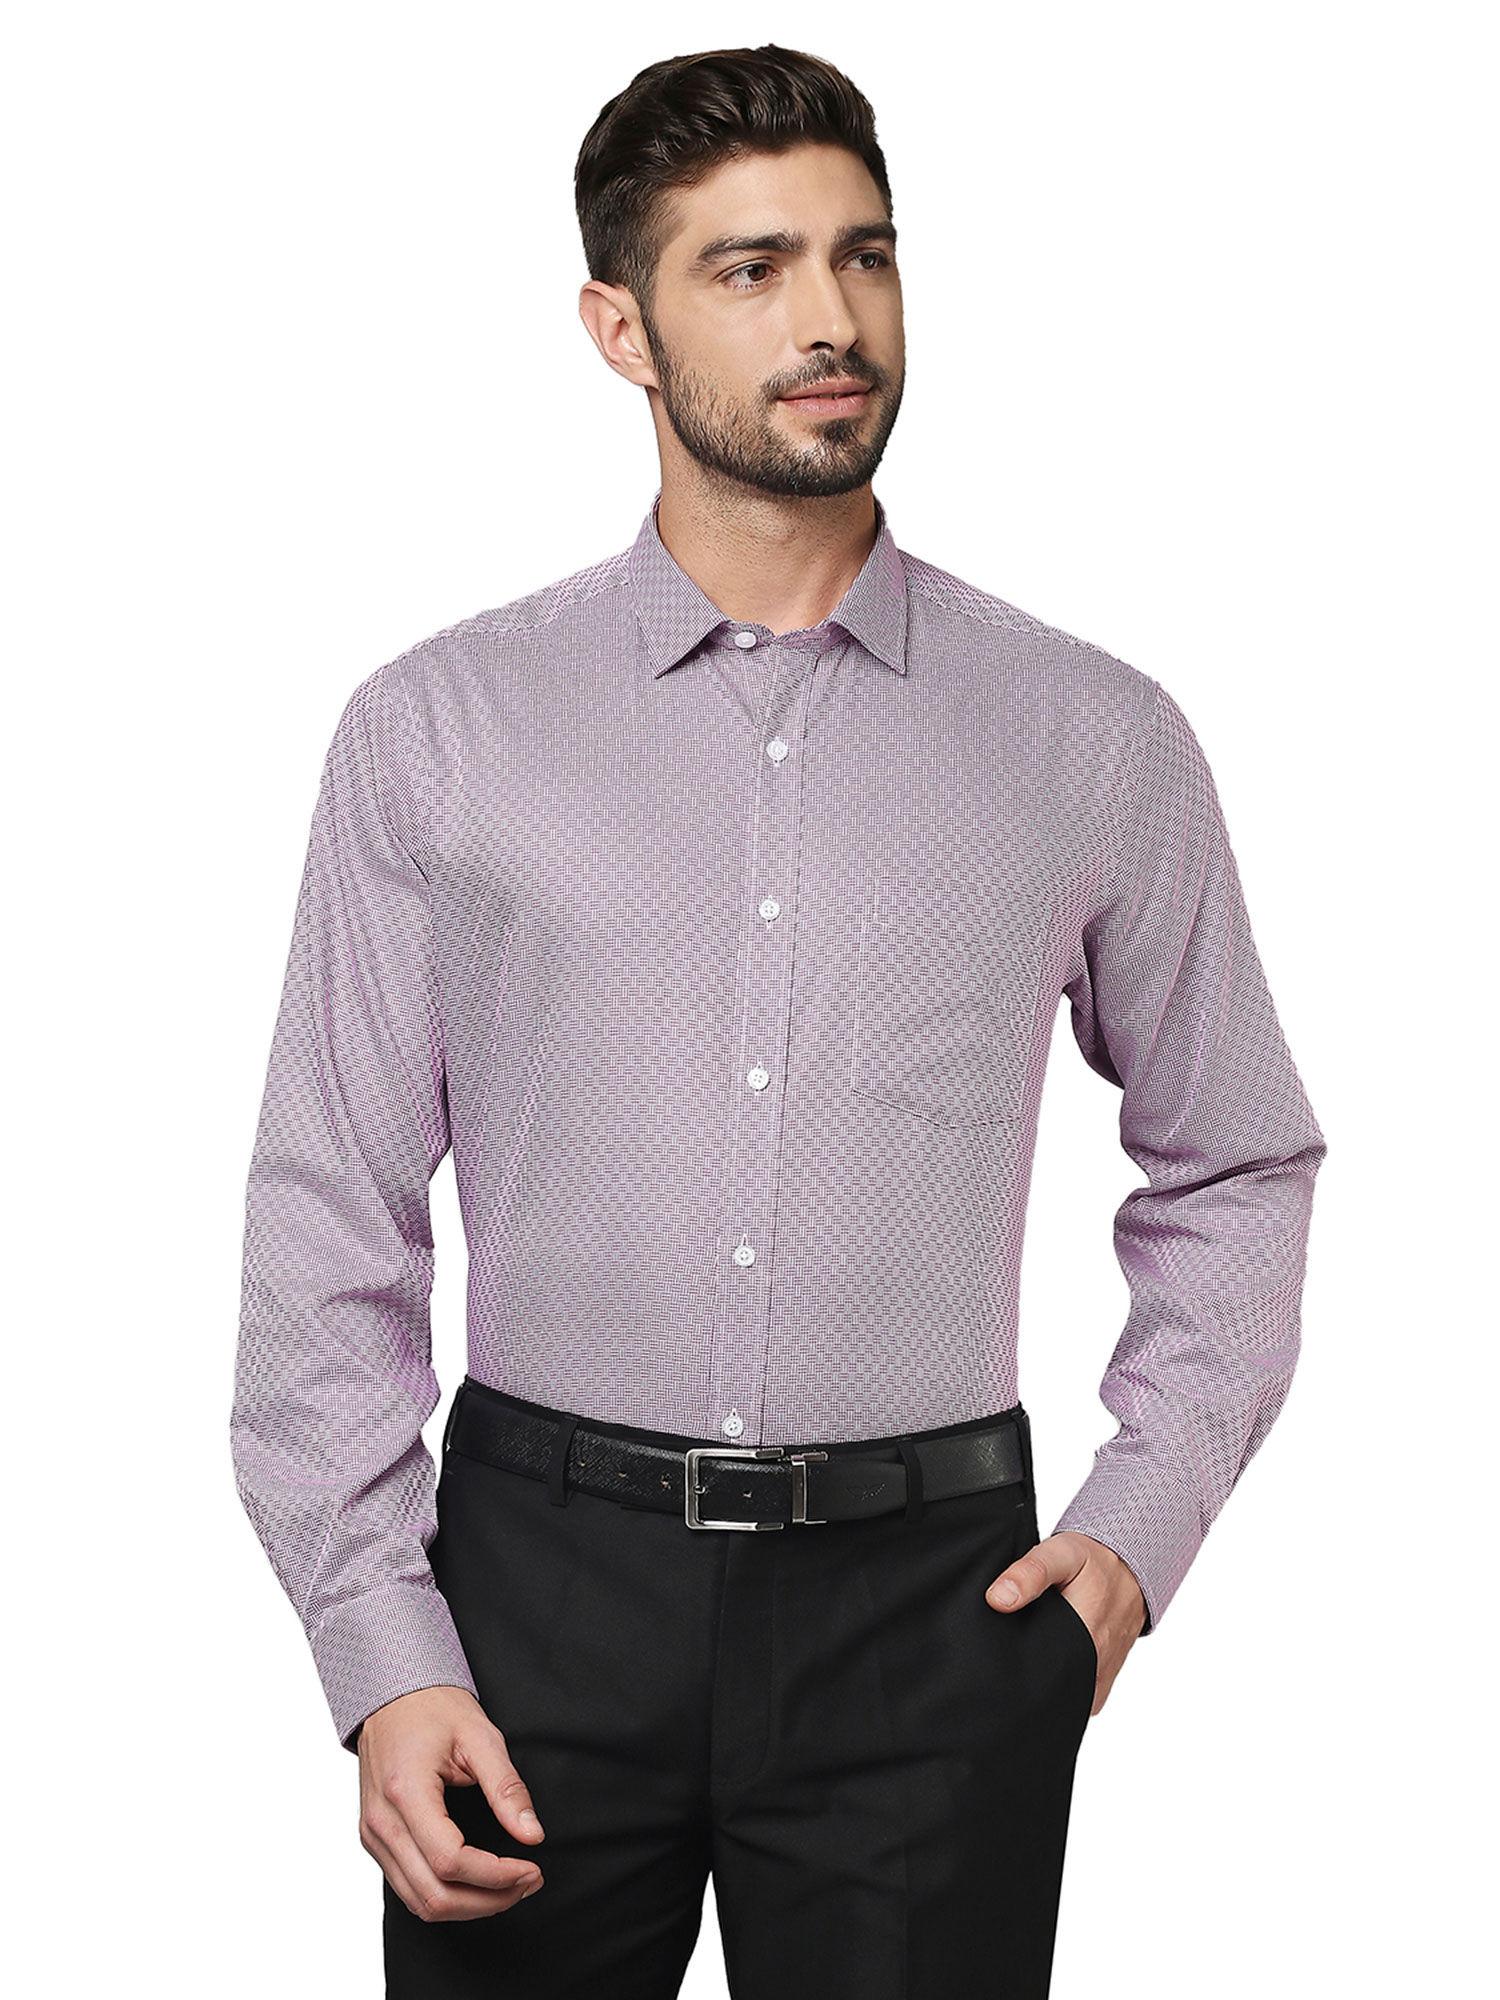 men medium purple shirt